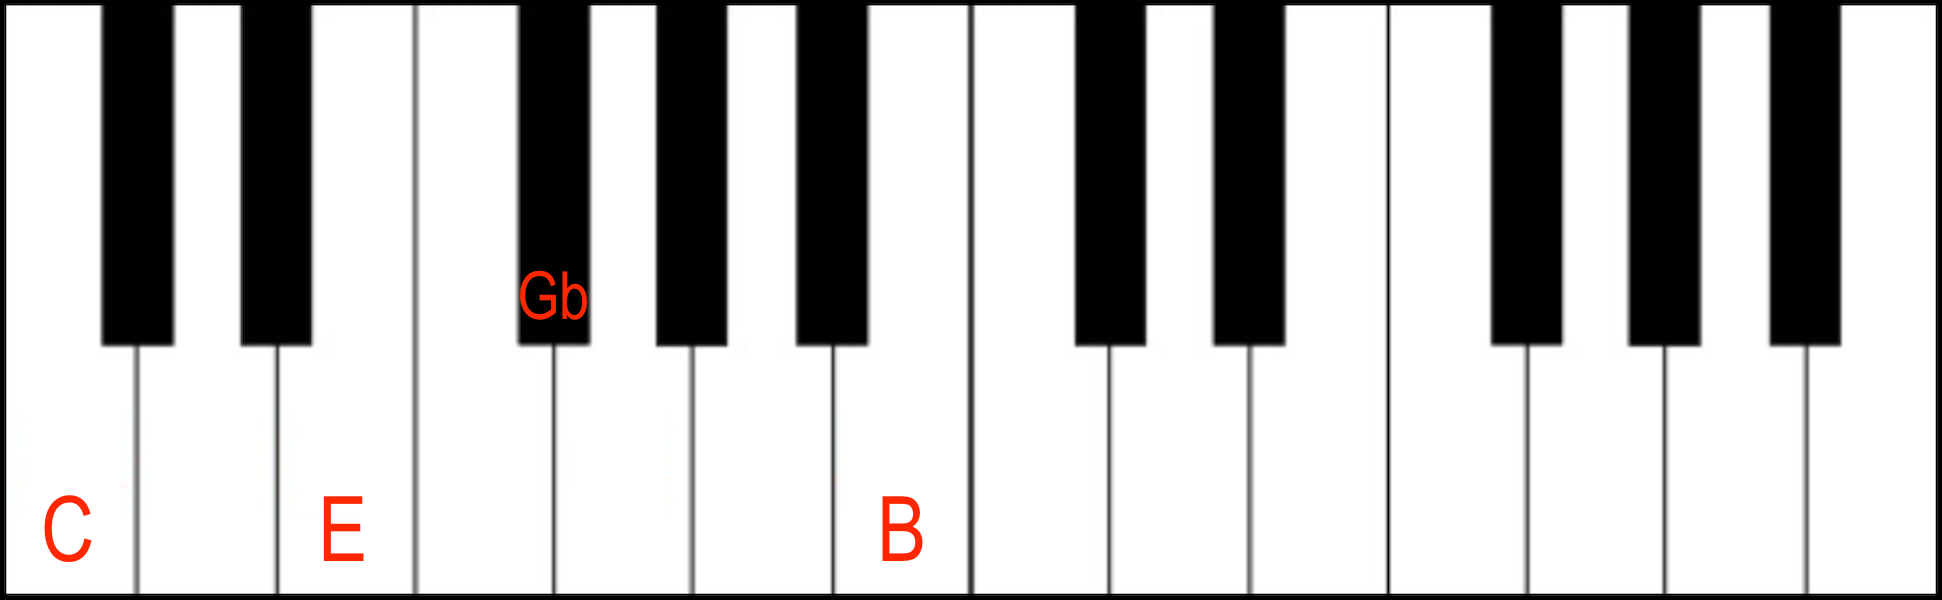 Cmaj7(b5) Piano Jazz Chord